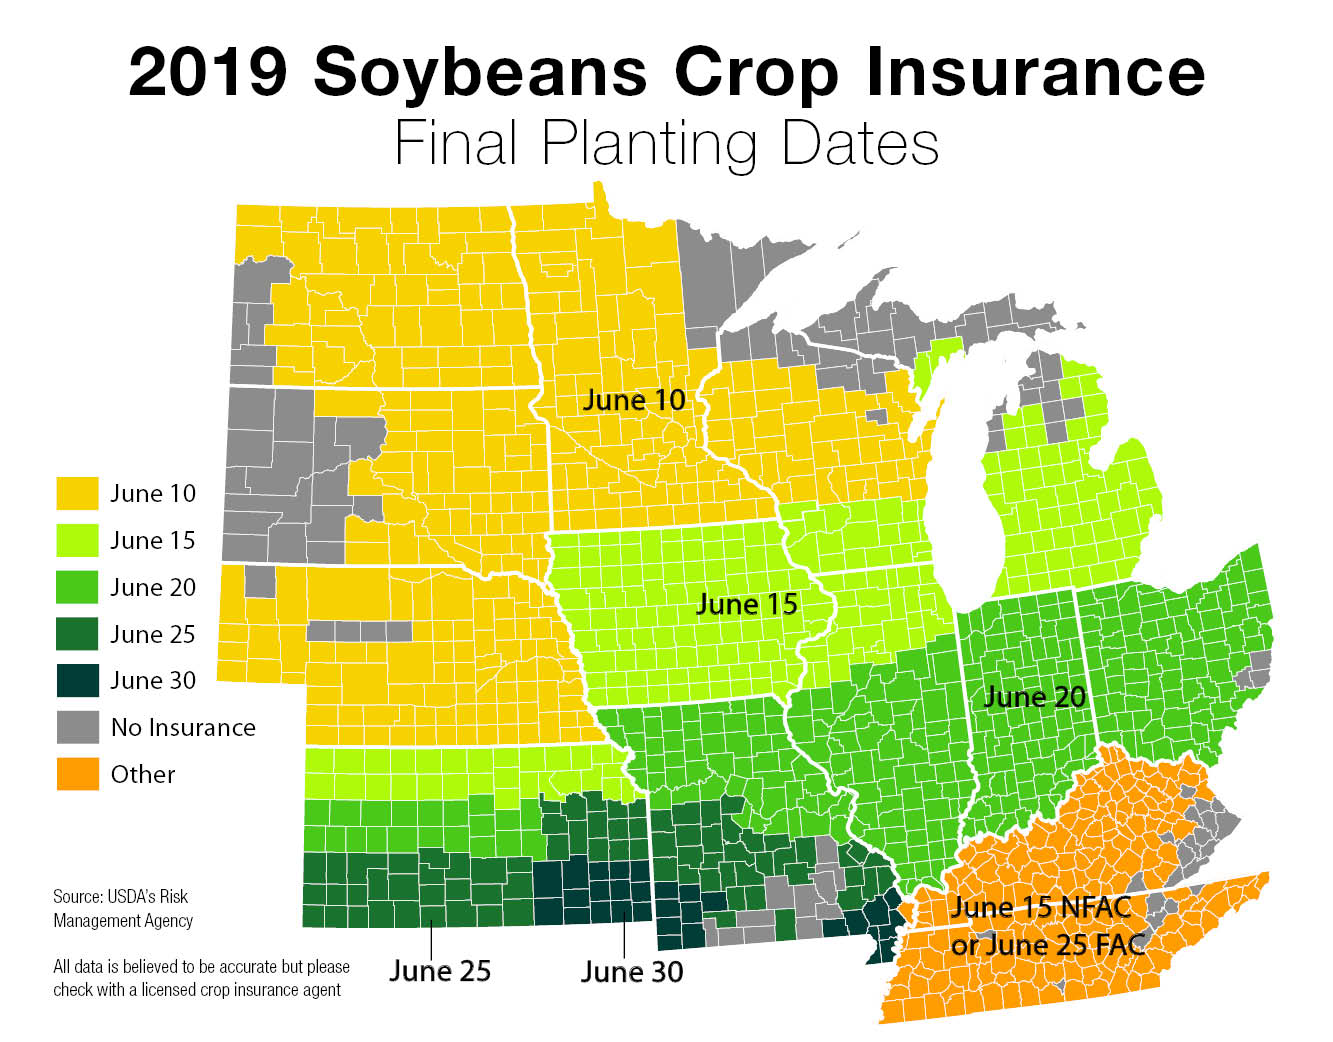 2019 Soybean Final Planting Dates